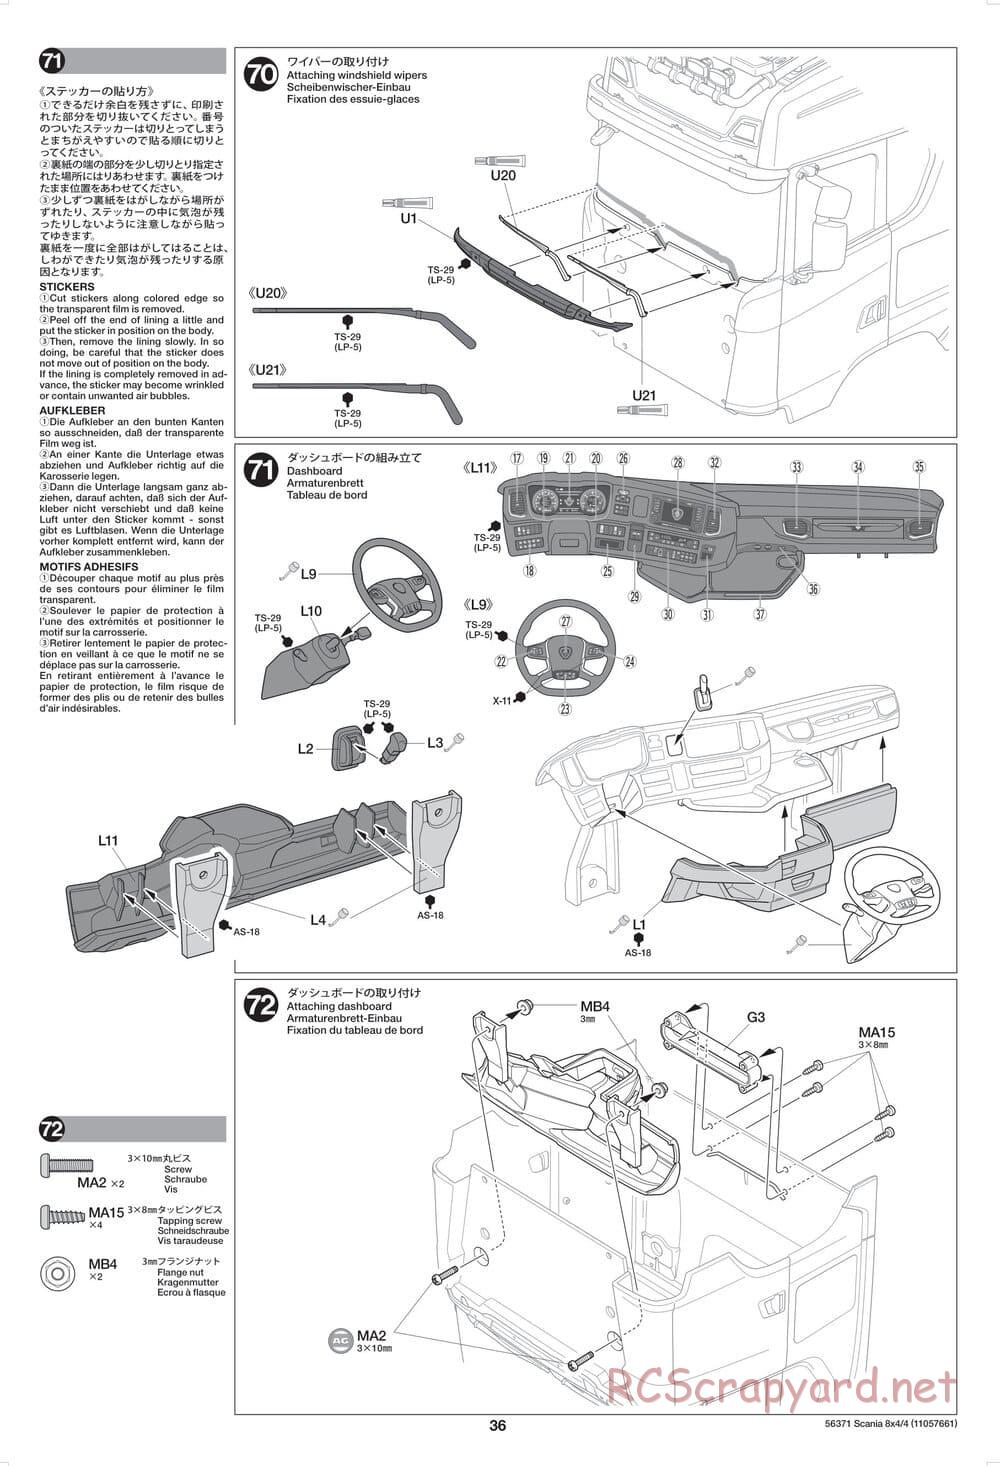 Tamiya - Scania 770 S 8x4/4 Chassis - Manual - Page 36